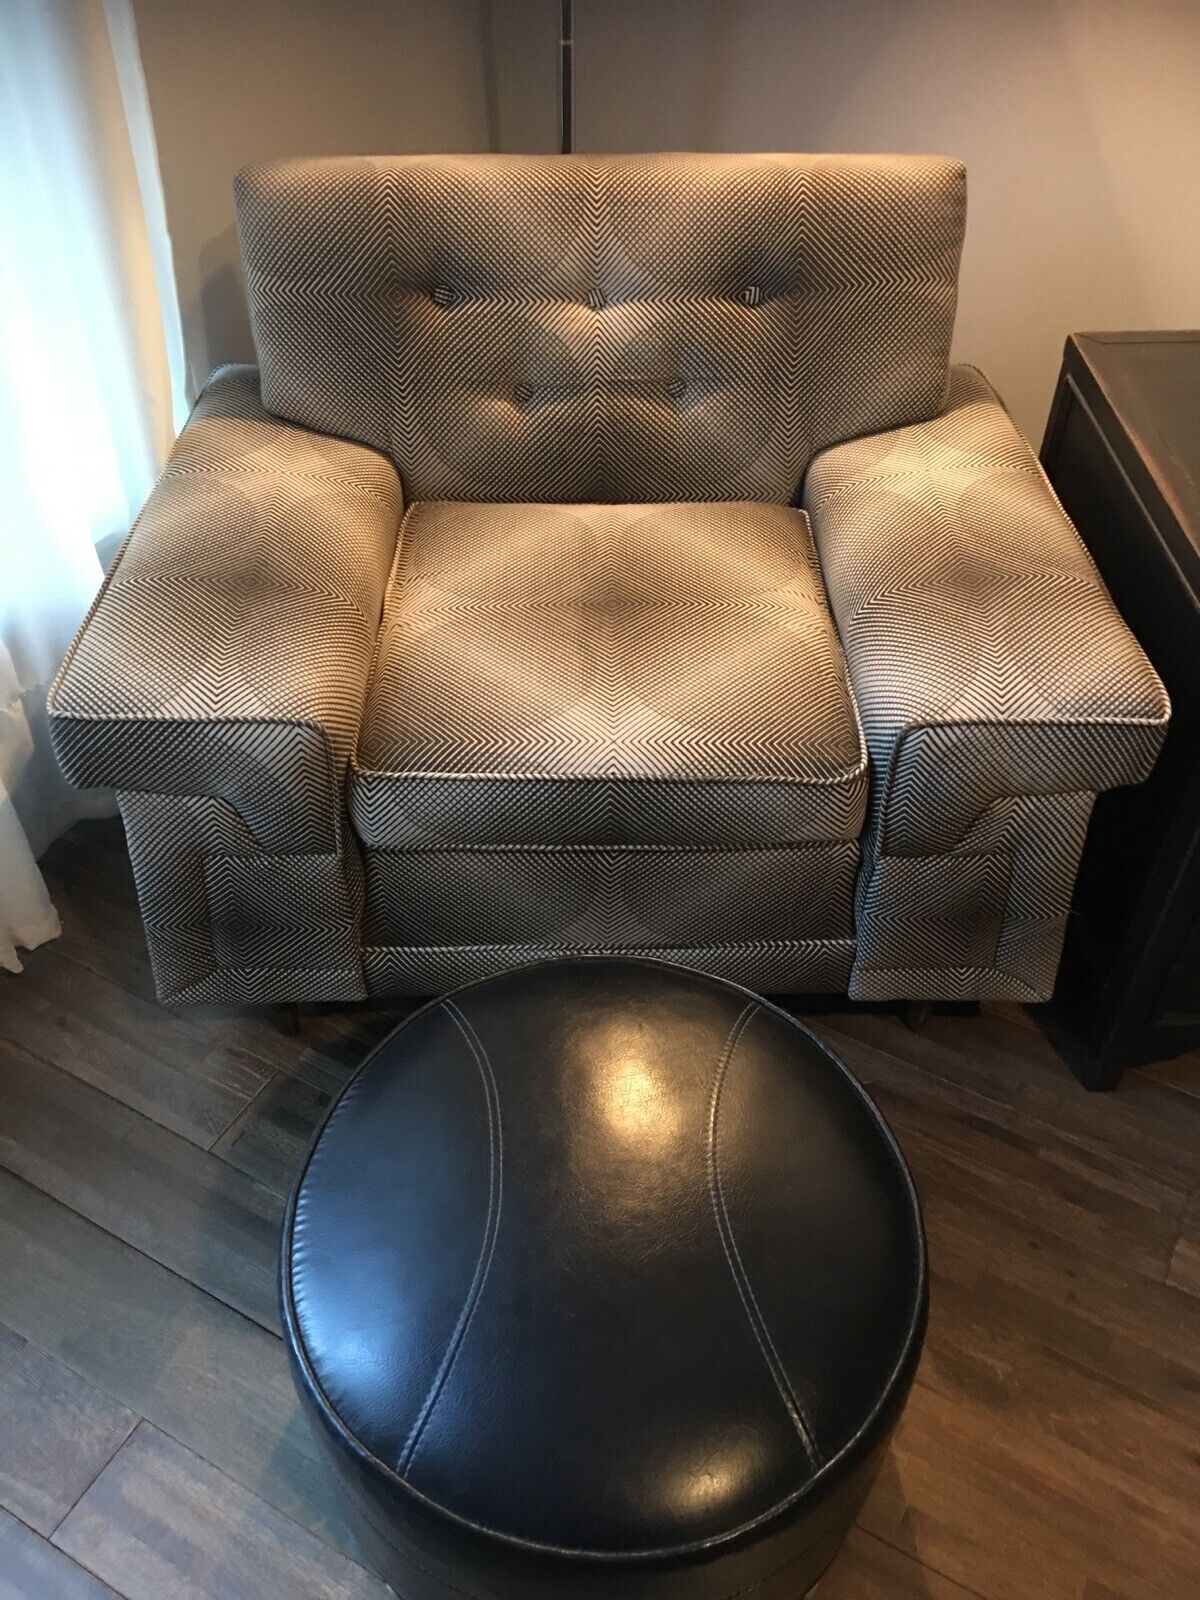 Kroehler mid century modern vintage lounge chair.